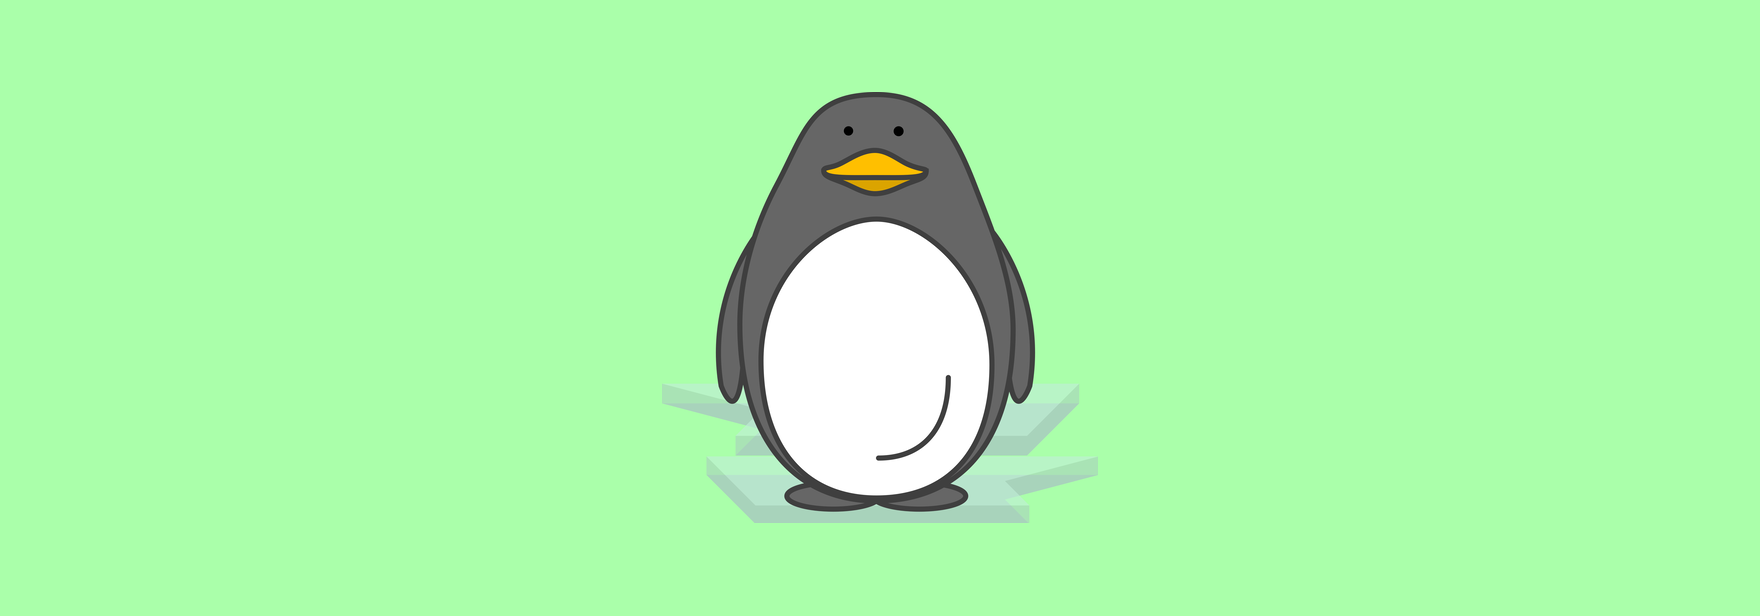 Выбираем дистрибутив Linux для новичка